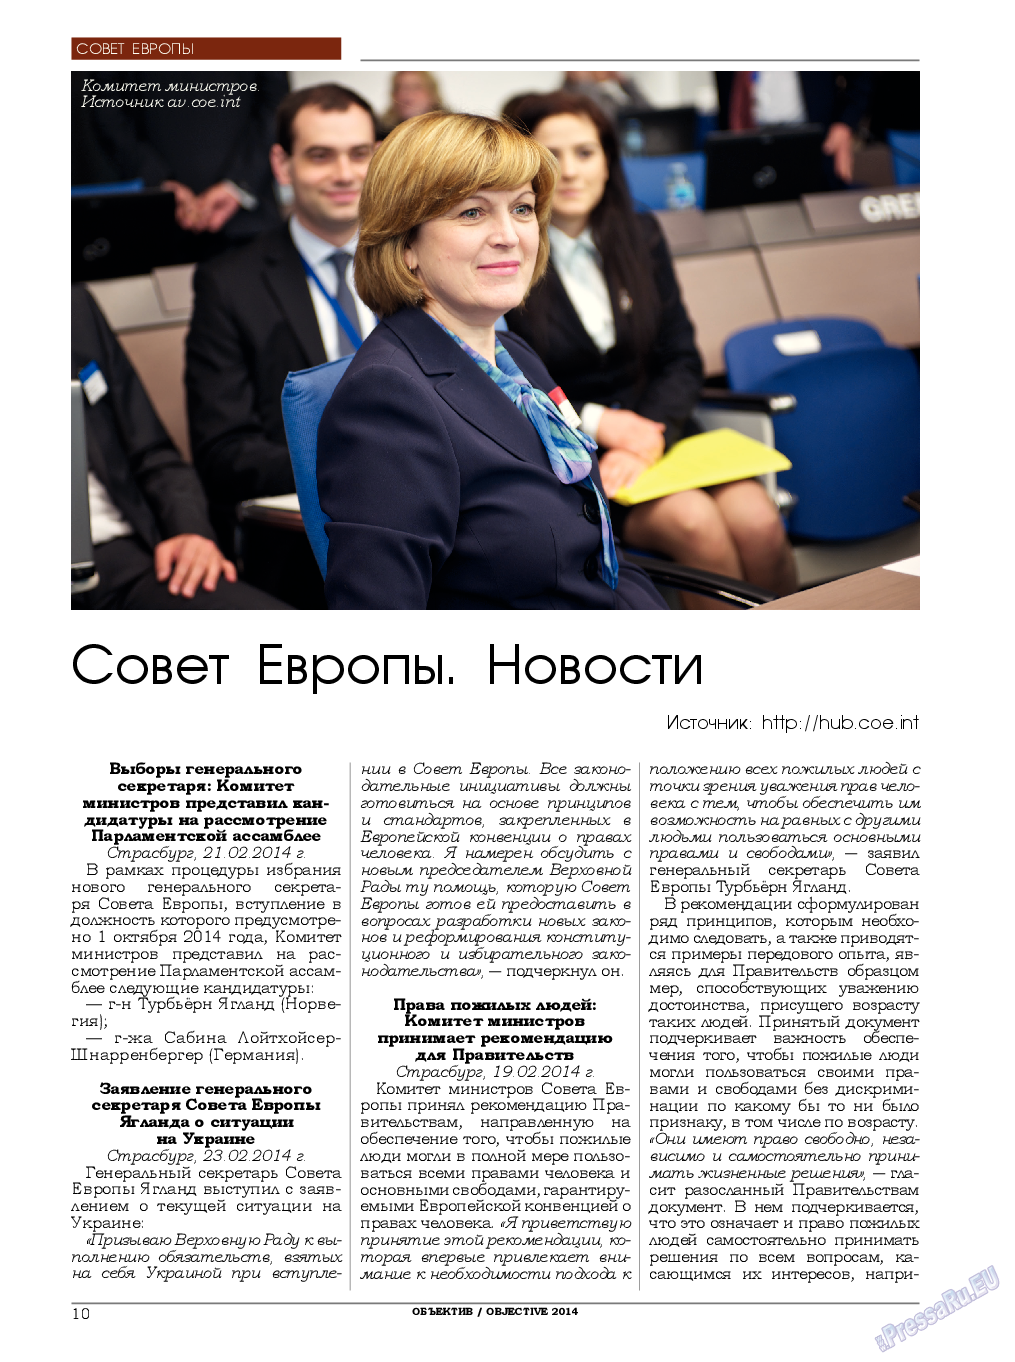 Объектив EU, журнал. 2014 №2 стр.10